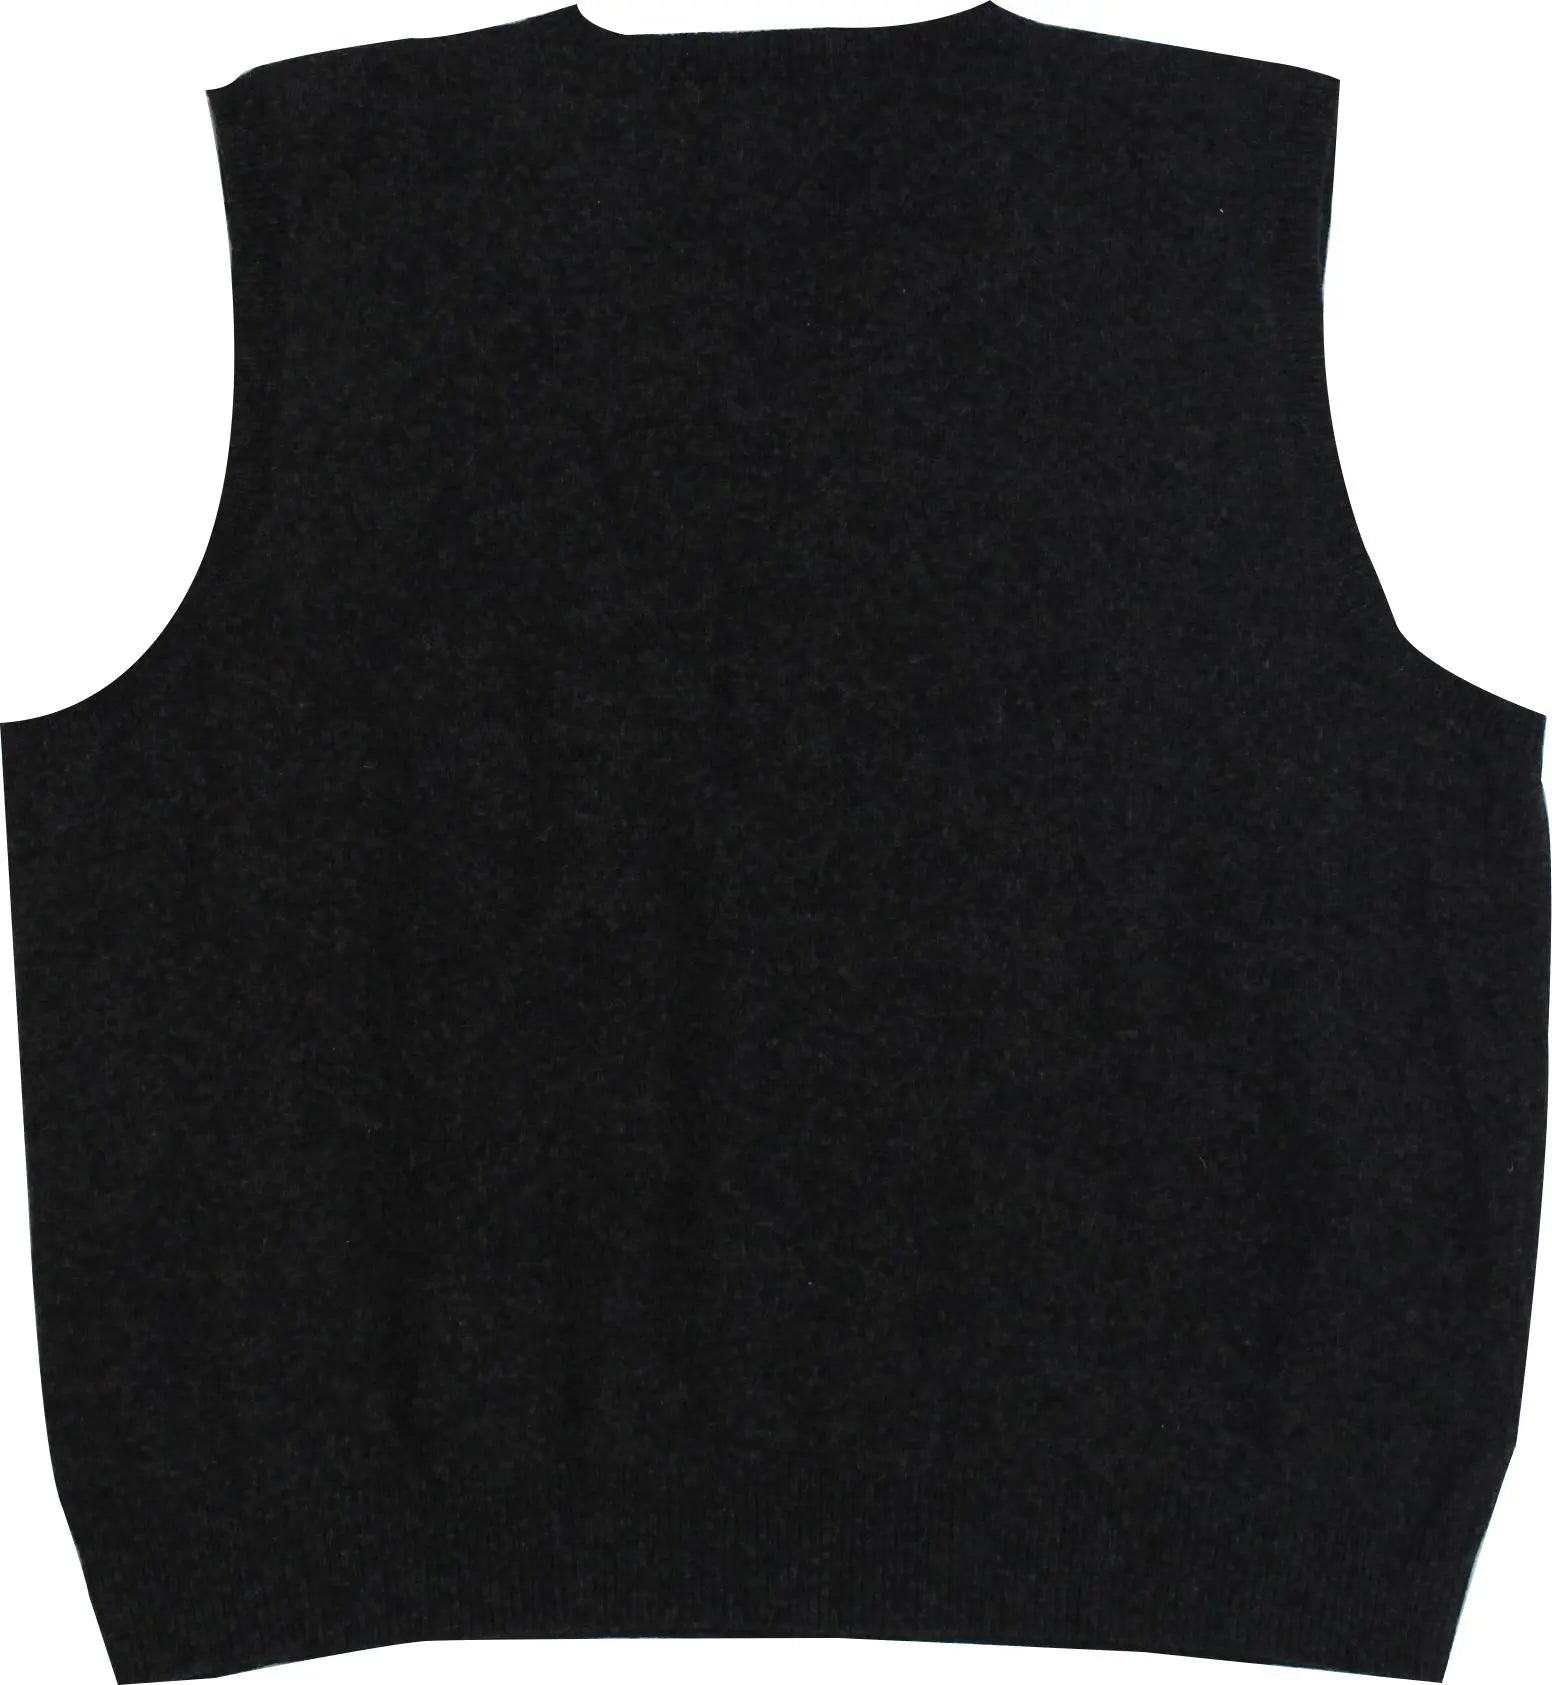 Ralph Lauren - 100% Wool Sleeveless Vest by Ralph Lauren- ThriftTale.com - Vintage and second handclothing